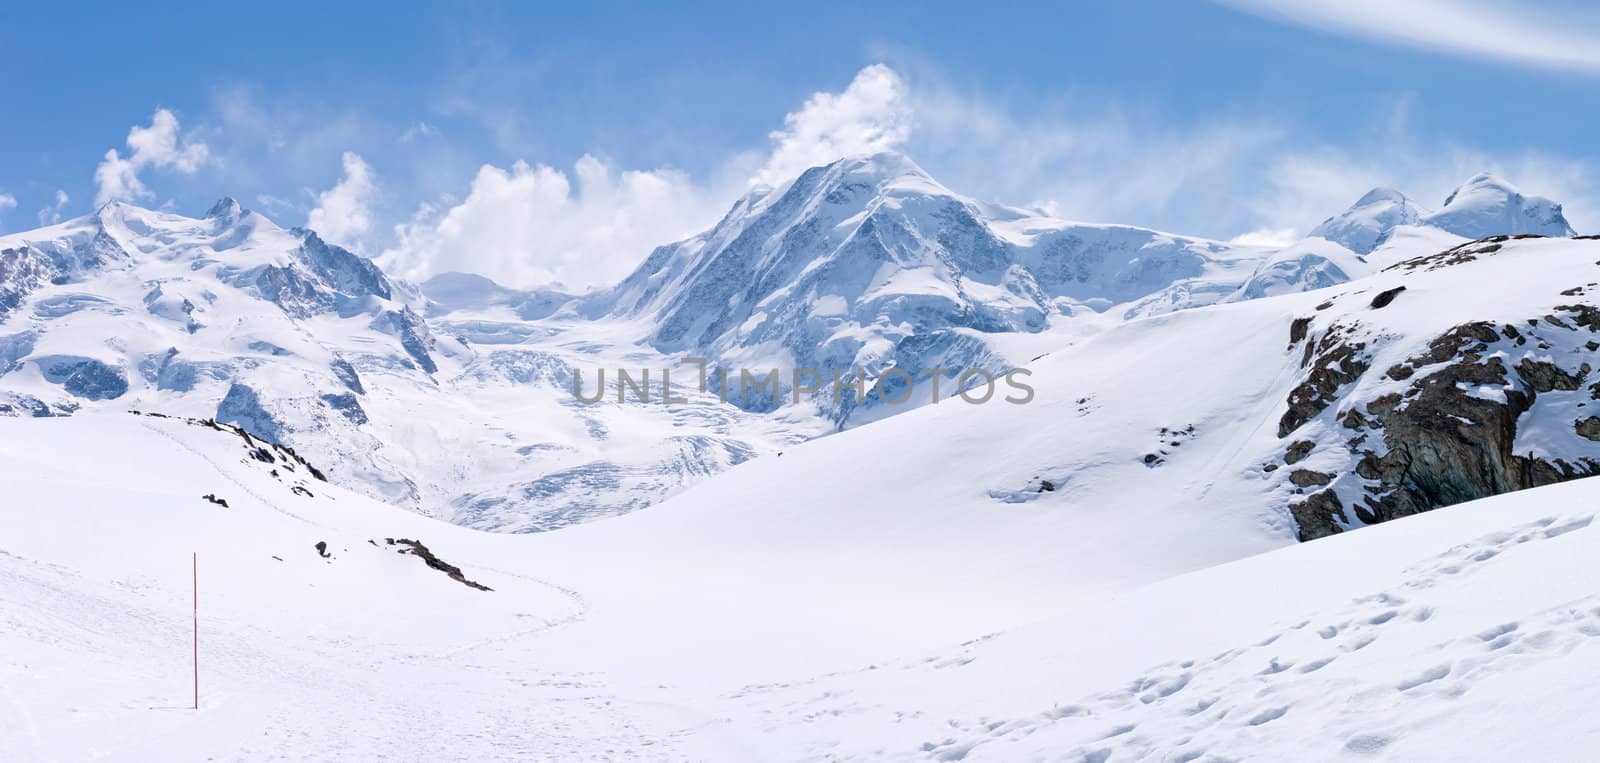 Snow Mountain Range Landscape by vichie81